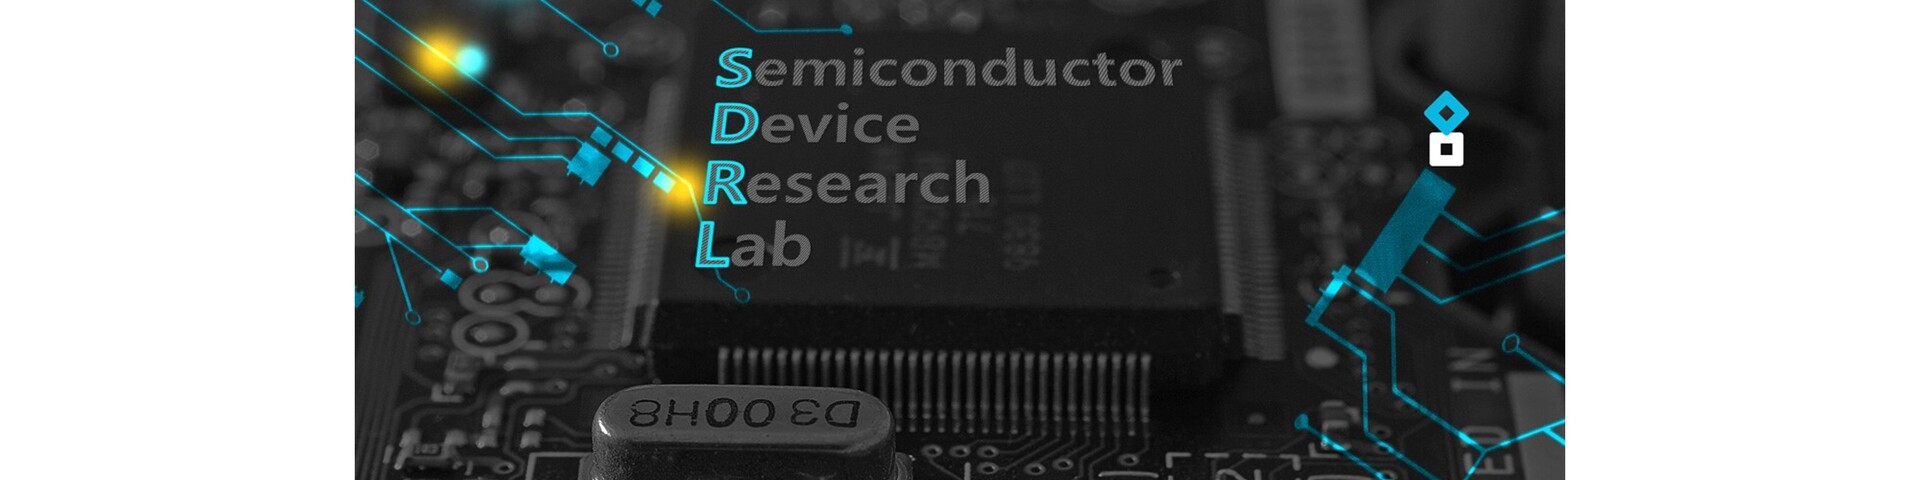 Semiconductor Device Research Lab MAINVISUAL